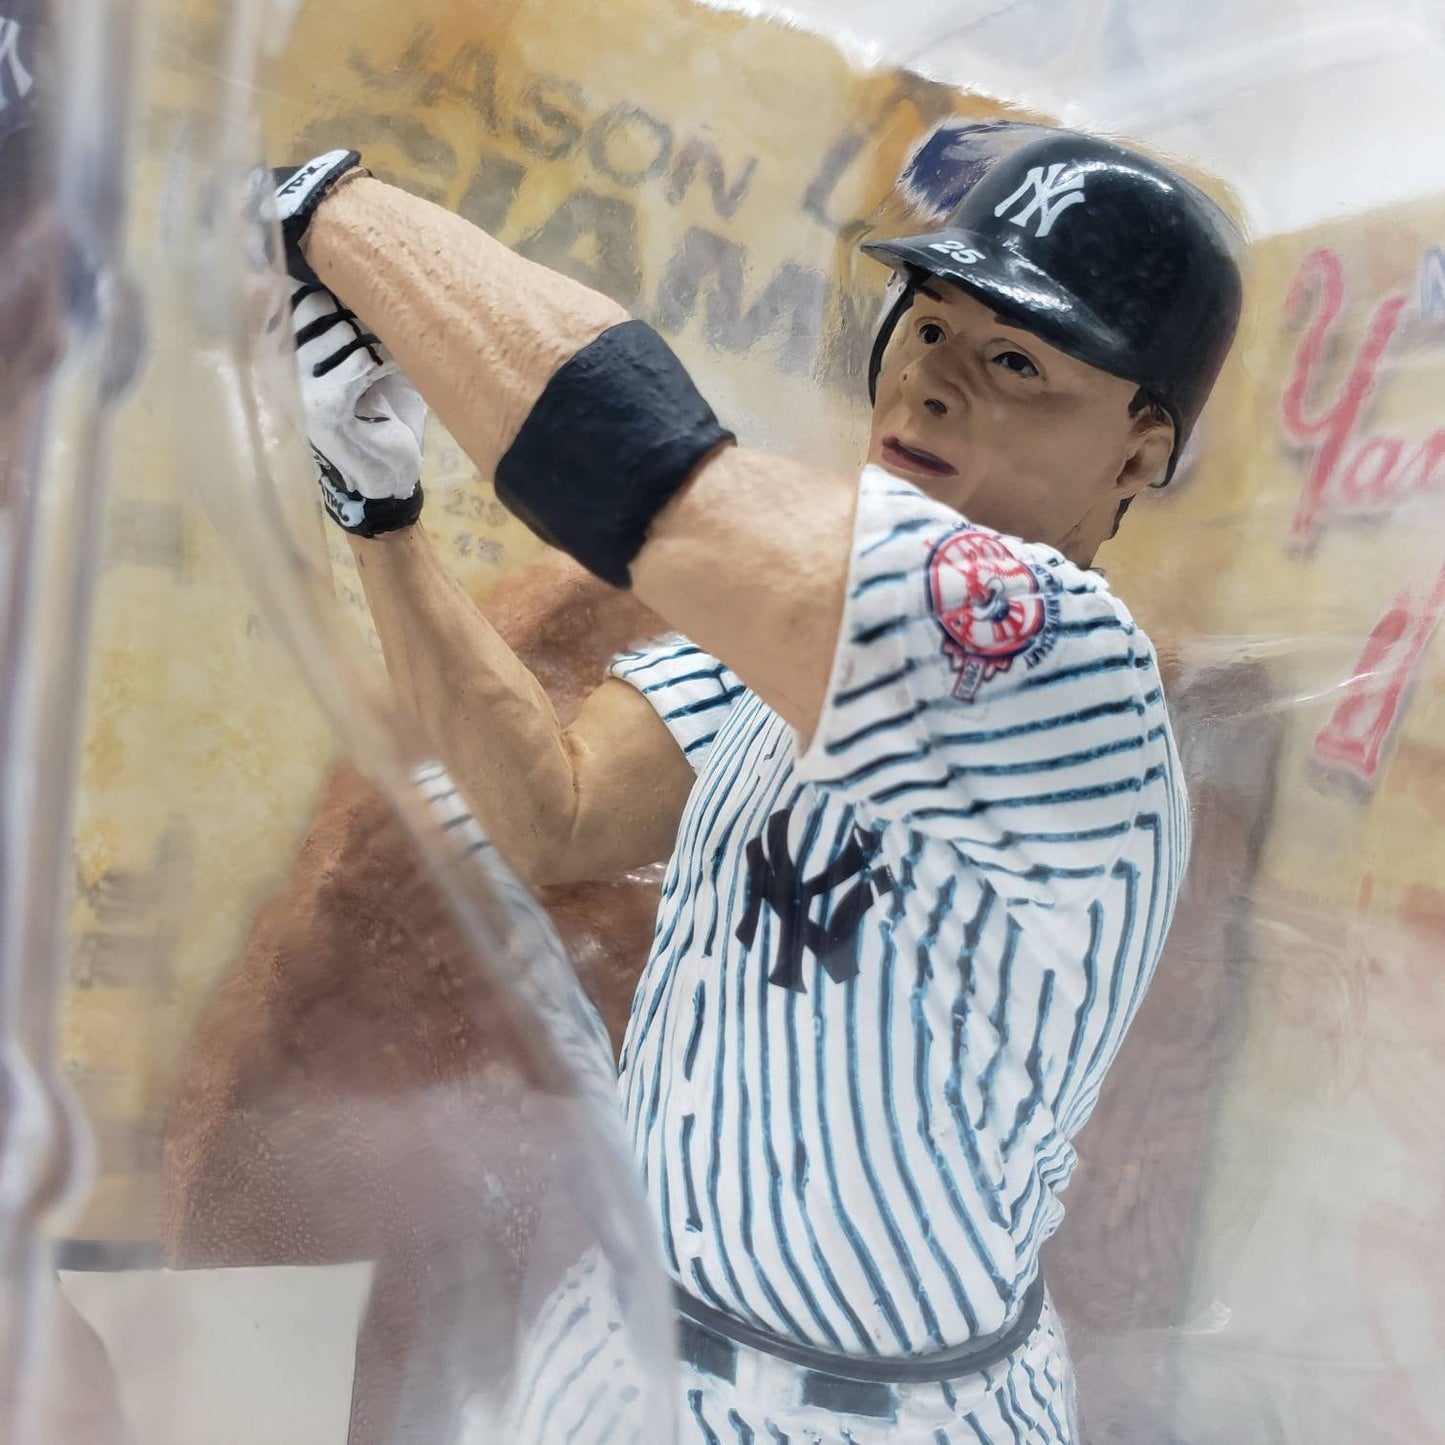 McFarlane Jason Giambi New York Yankees Pinstripes Series 5 Collectable Baseball Action Figure NY Yankees Decor MLB Memorabilia